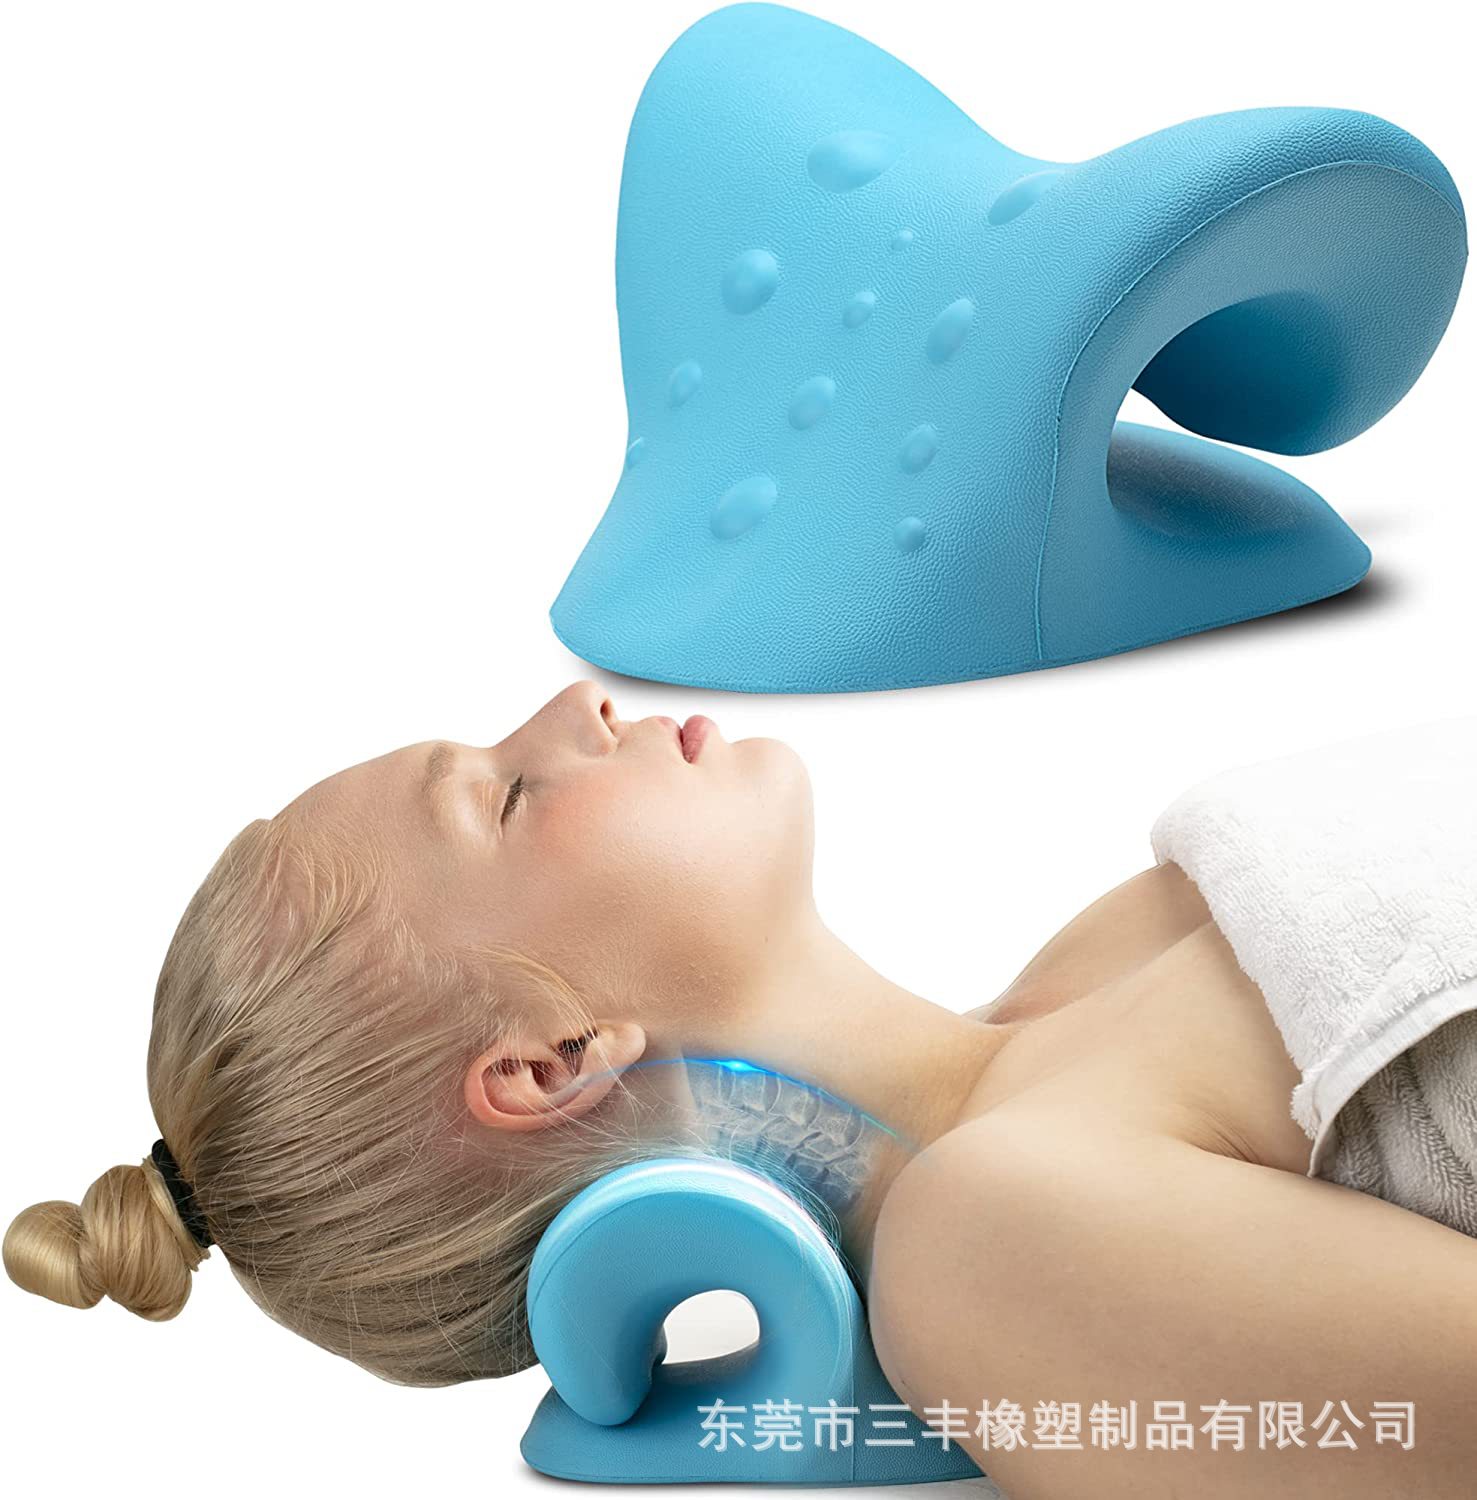 Gravity Neck Pillow 頸椎枕 家用聚氨酯頸椎枕 牽引枕 頸肩按摩枕頭